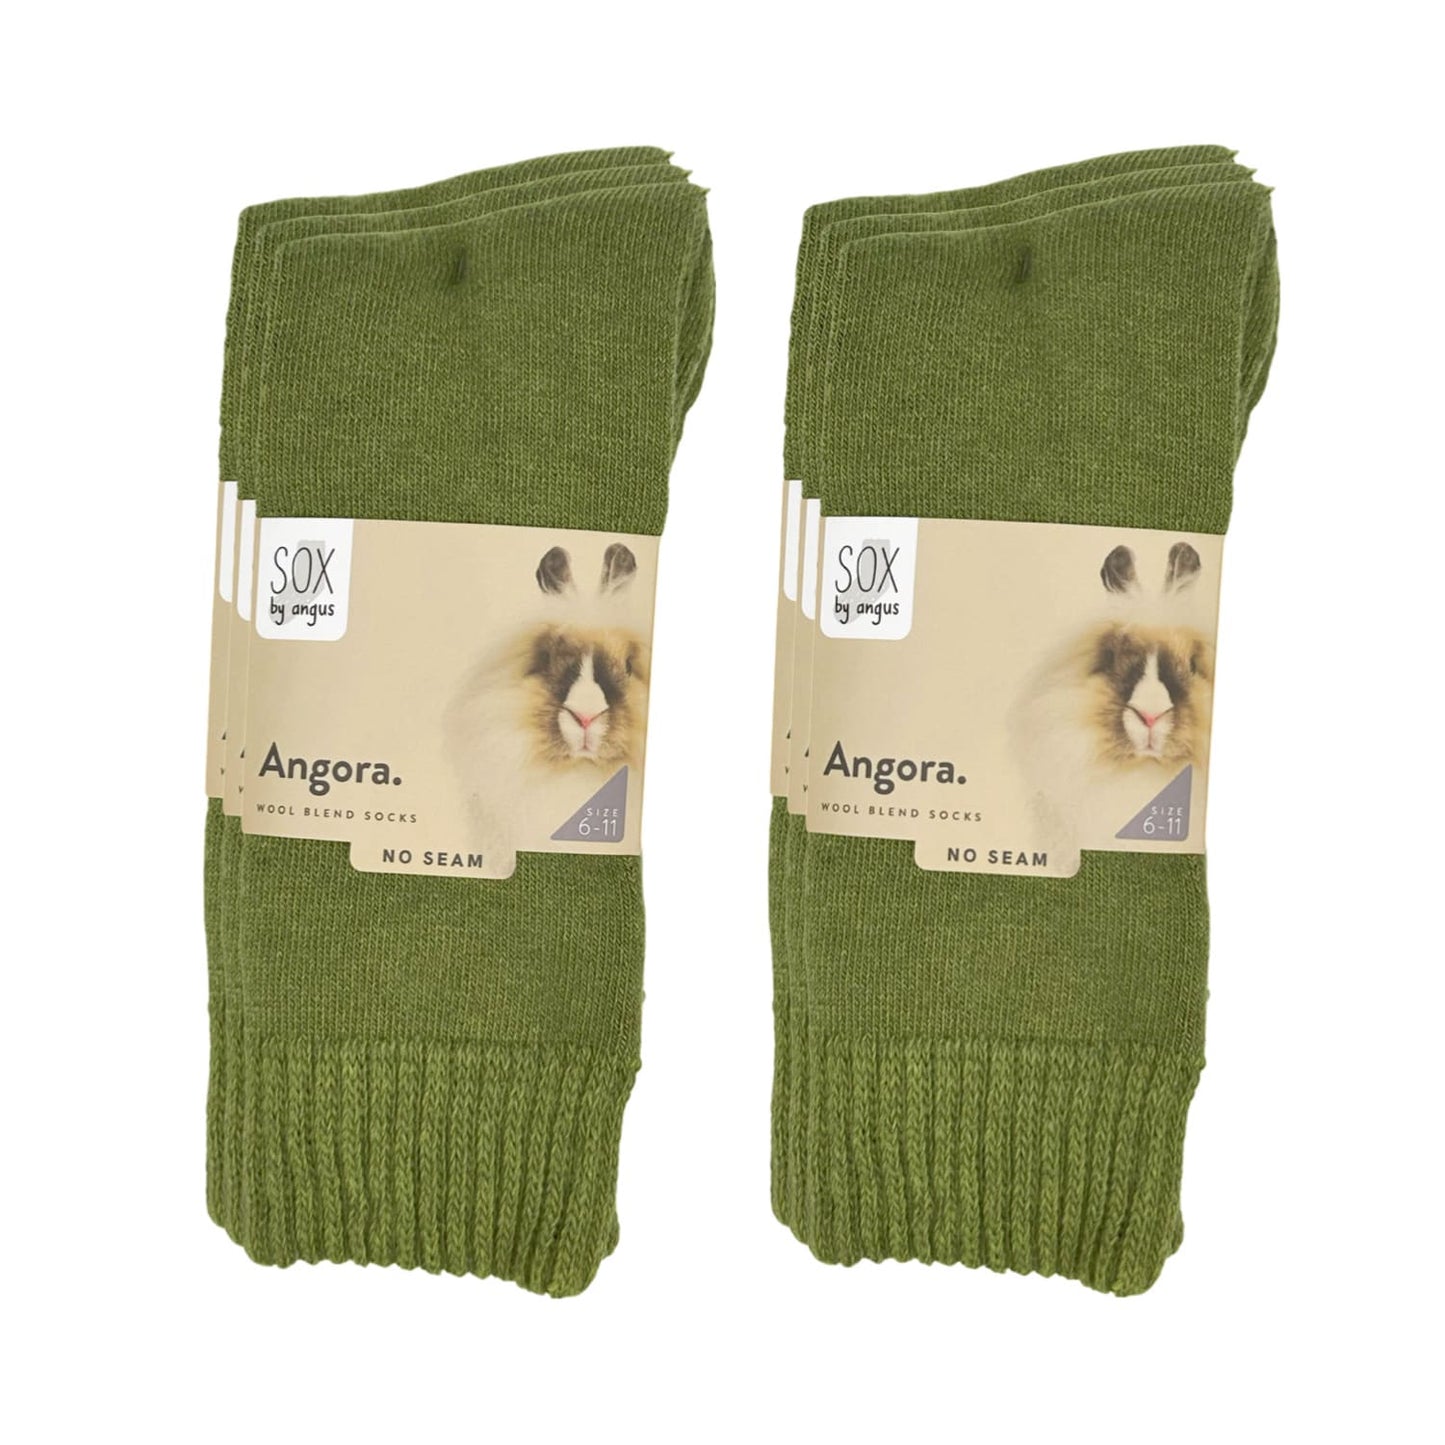 Angora Wool Blend Cushion Crew Socks - Khaki Green